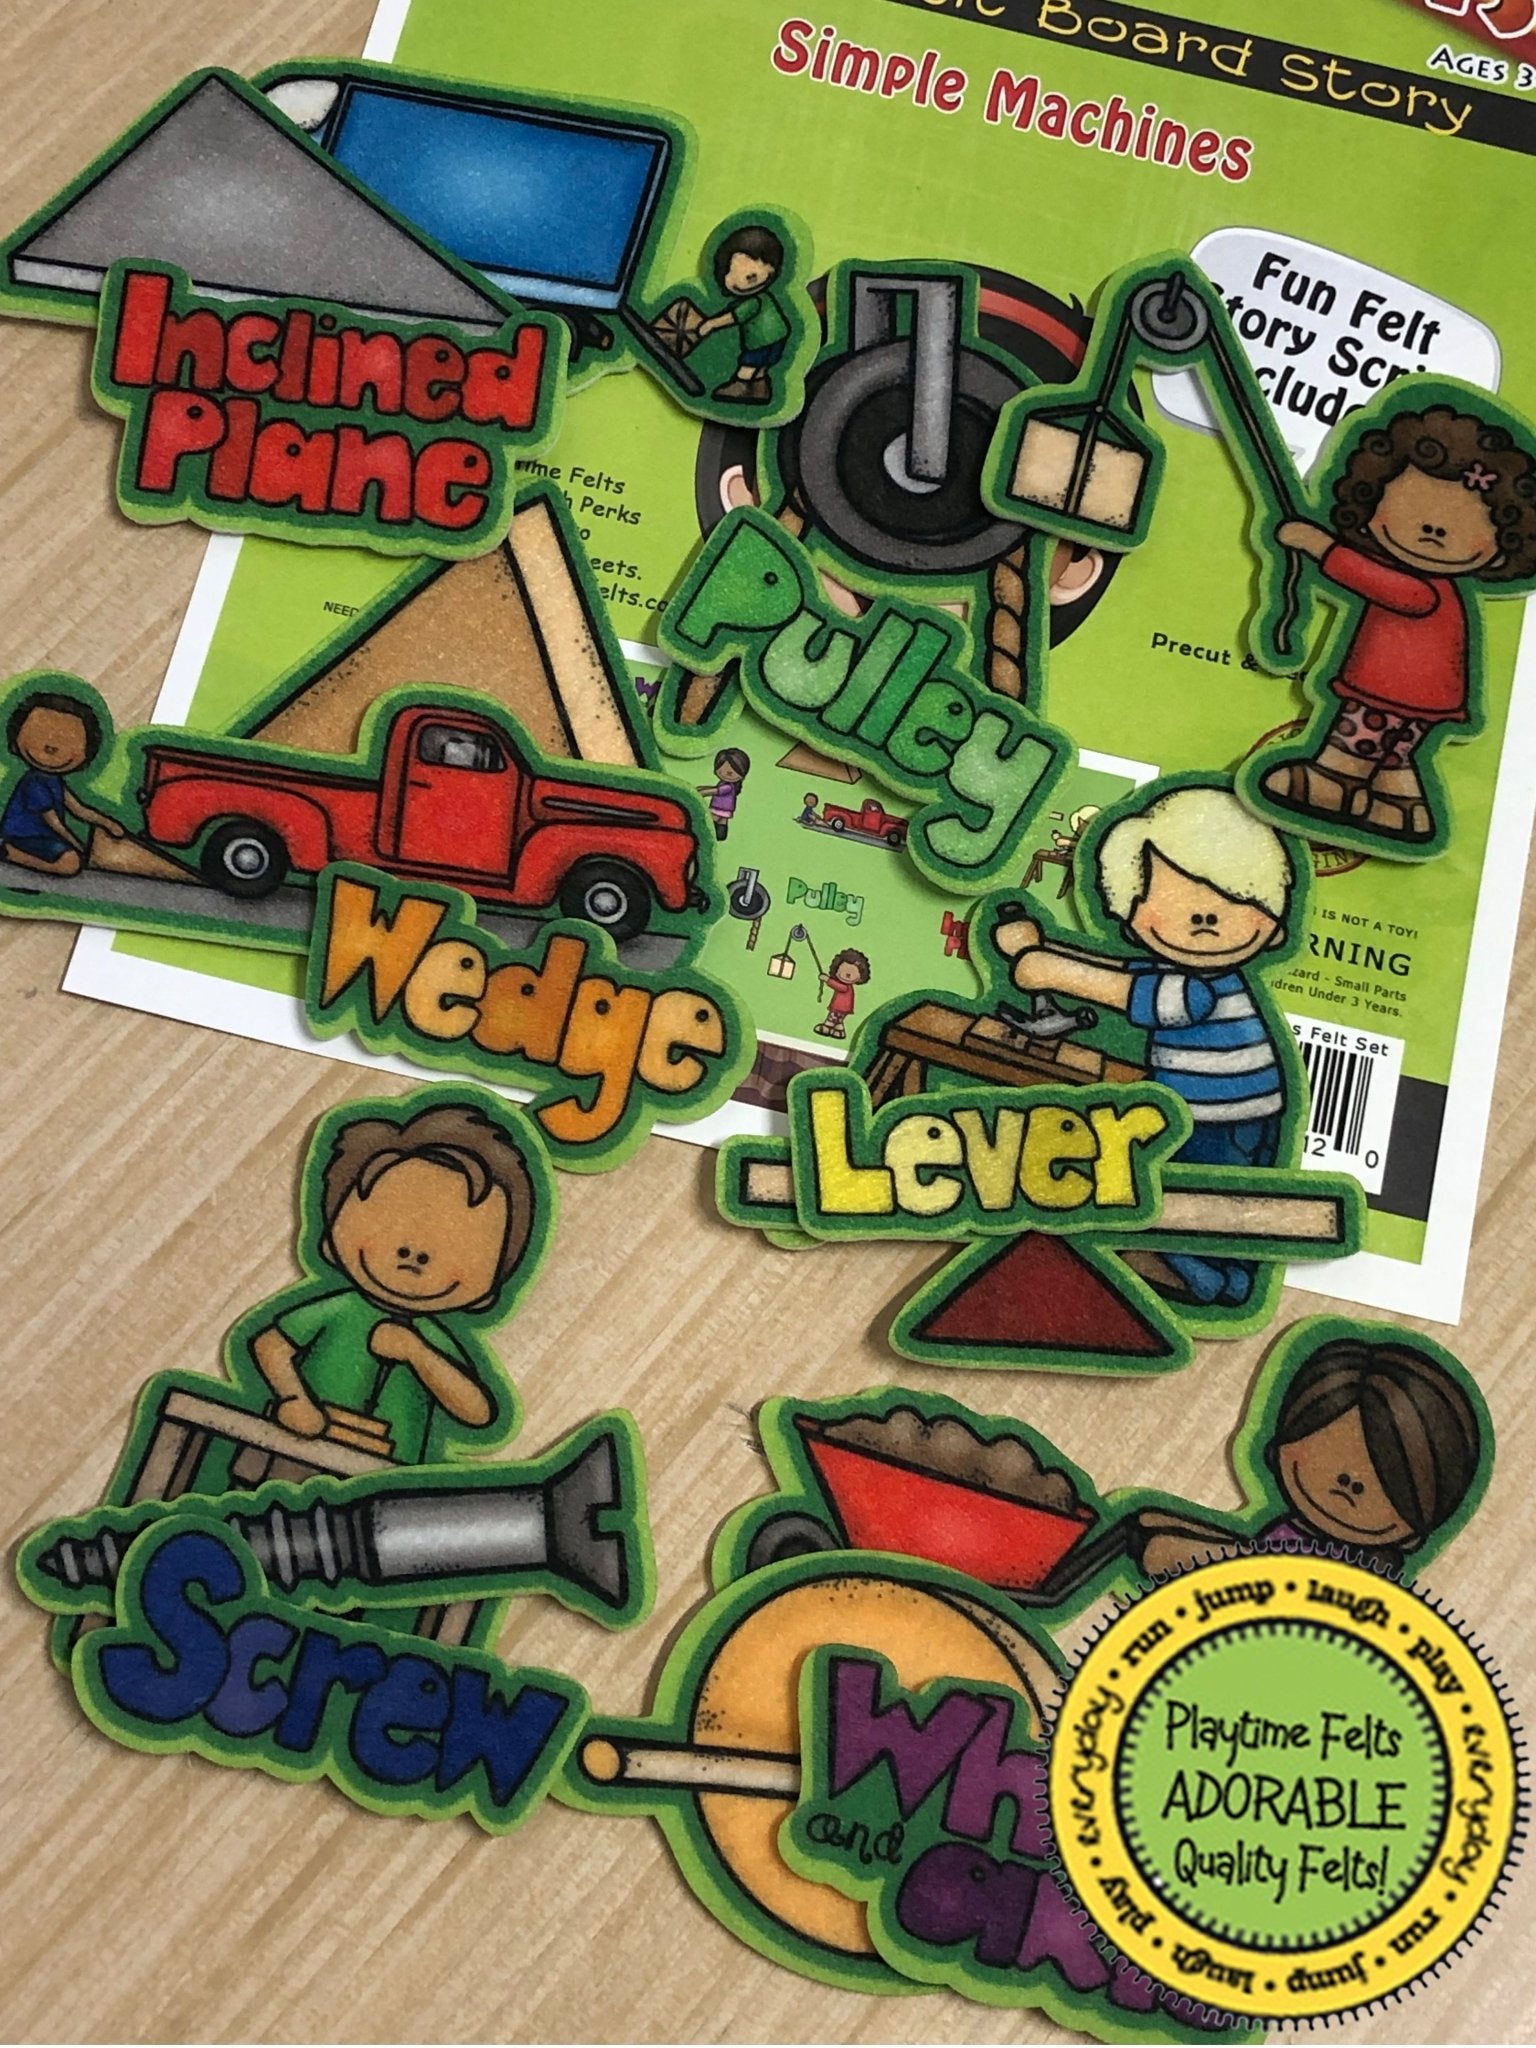 Simple Machines | Felt Board Story Set for Preschool - Felt Board Stories for Preschool Classroom Playtime Felts